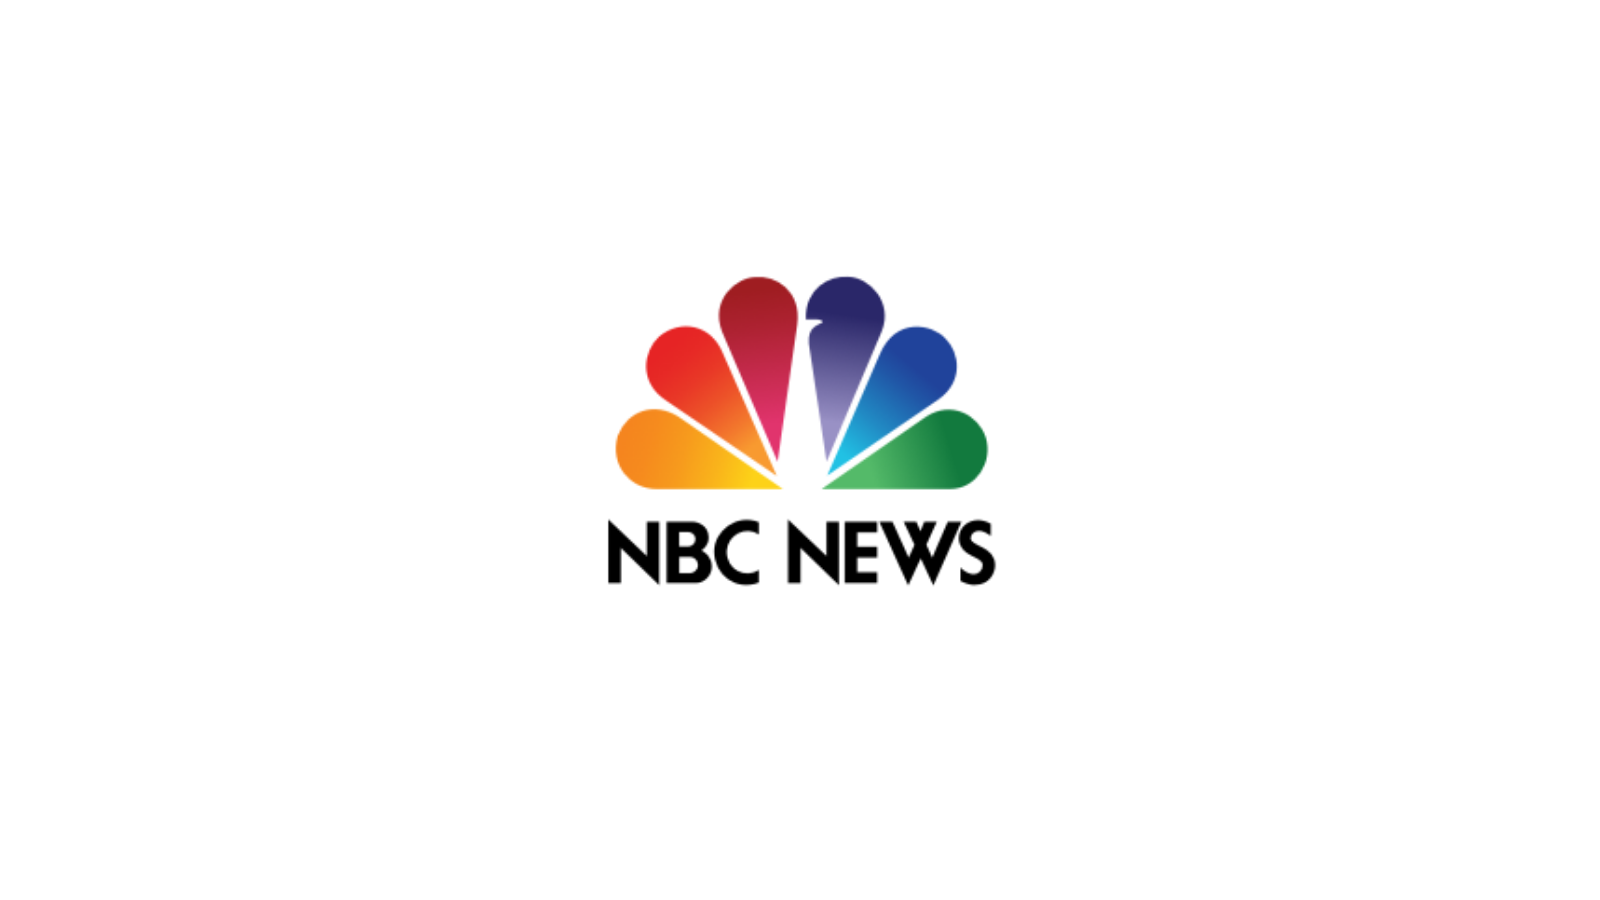 NBC News logo with peacock